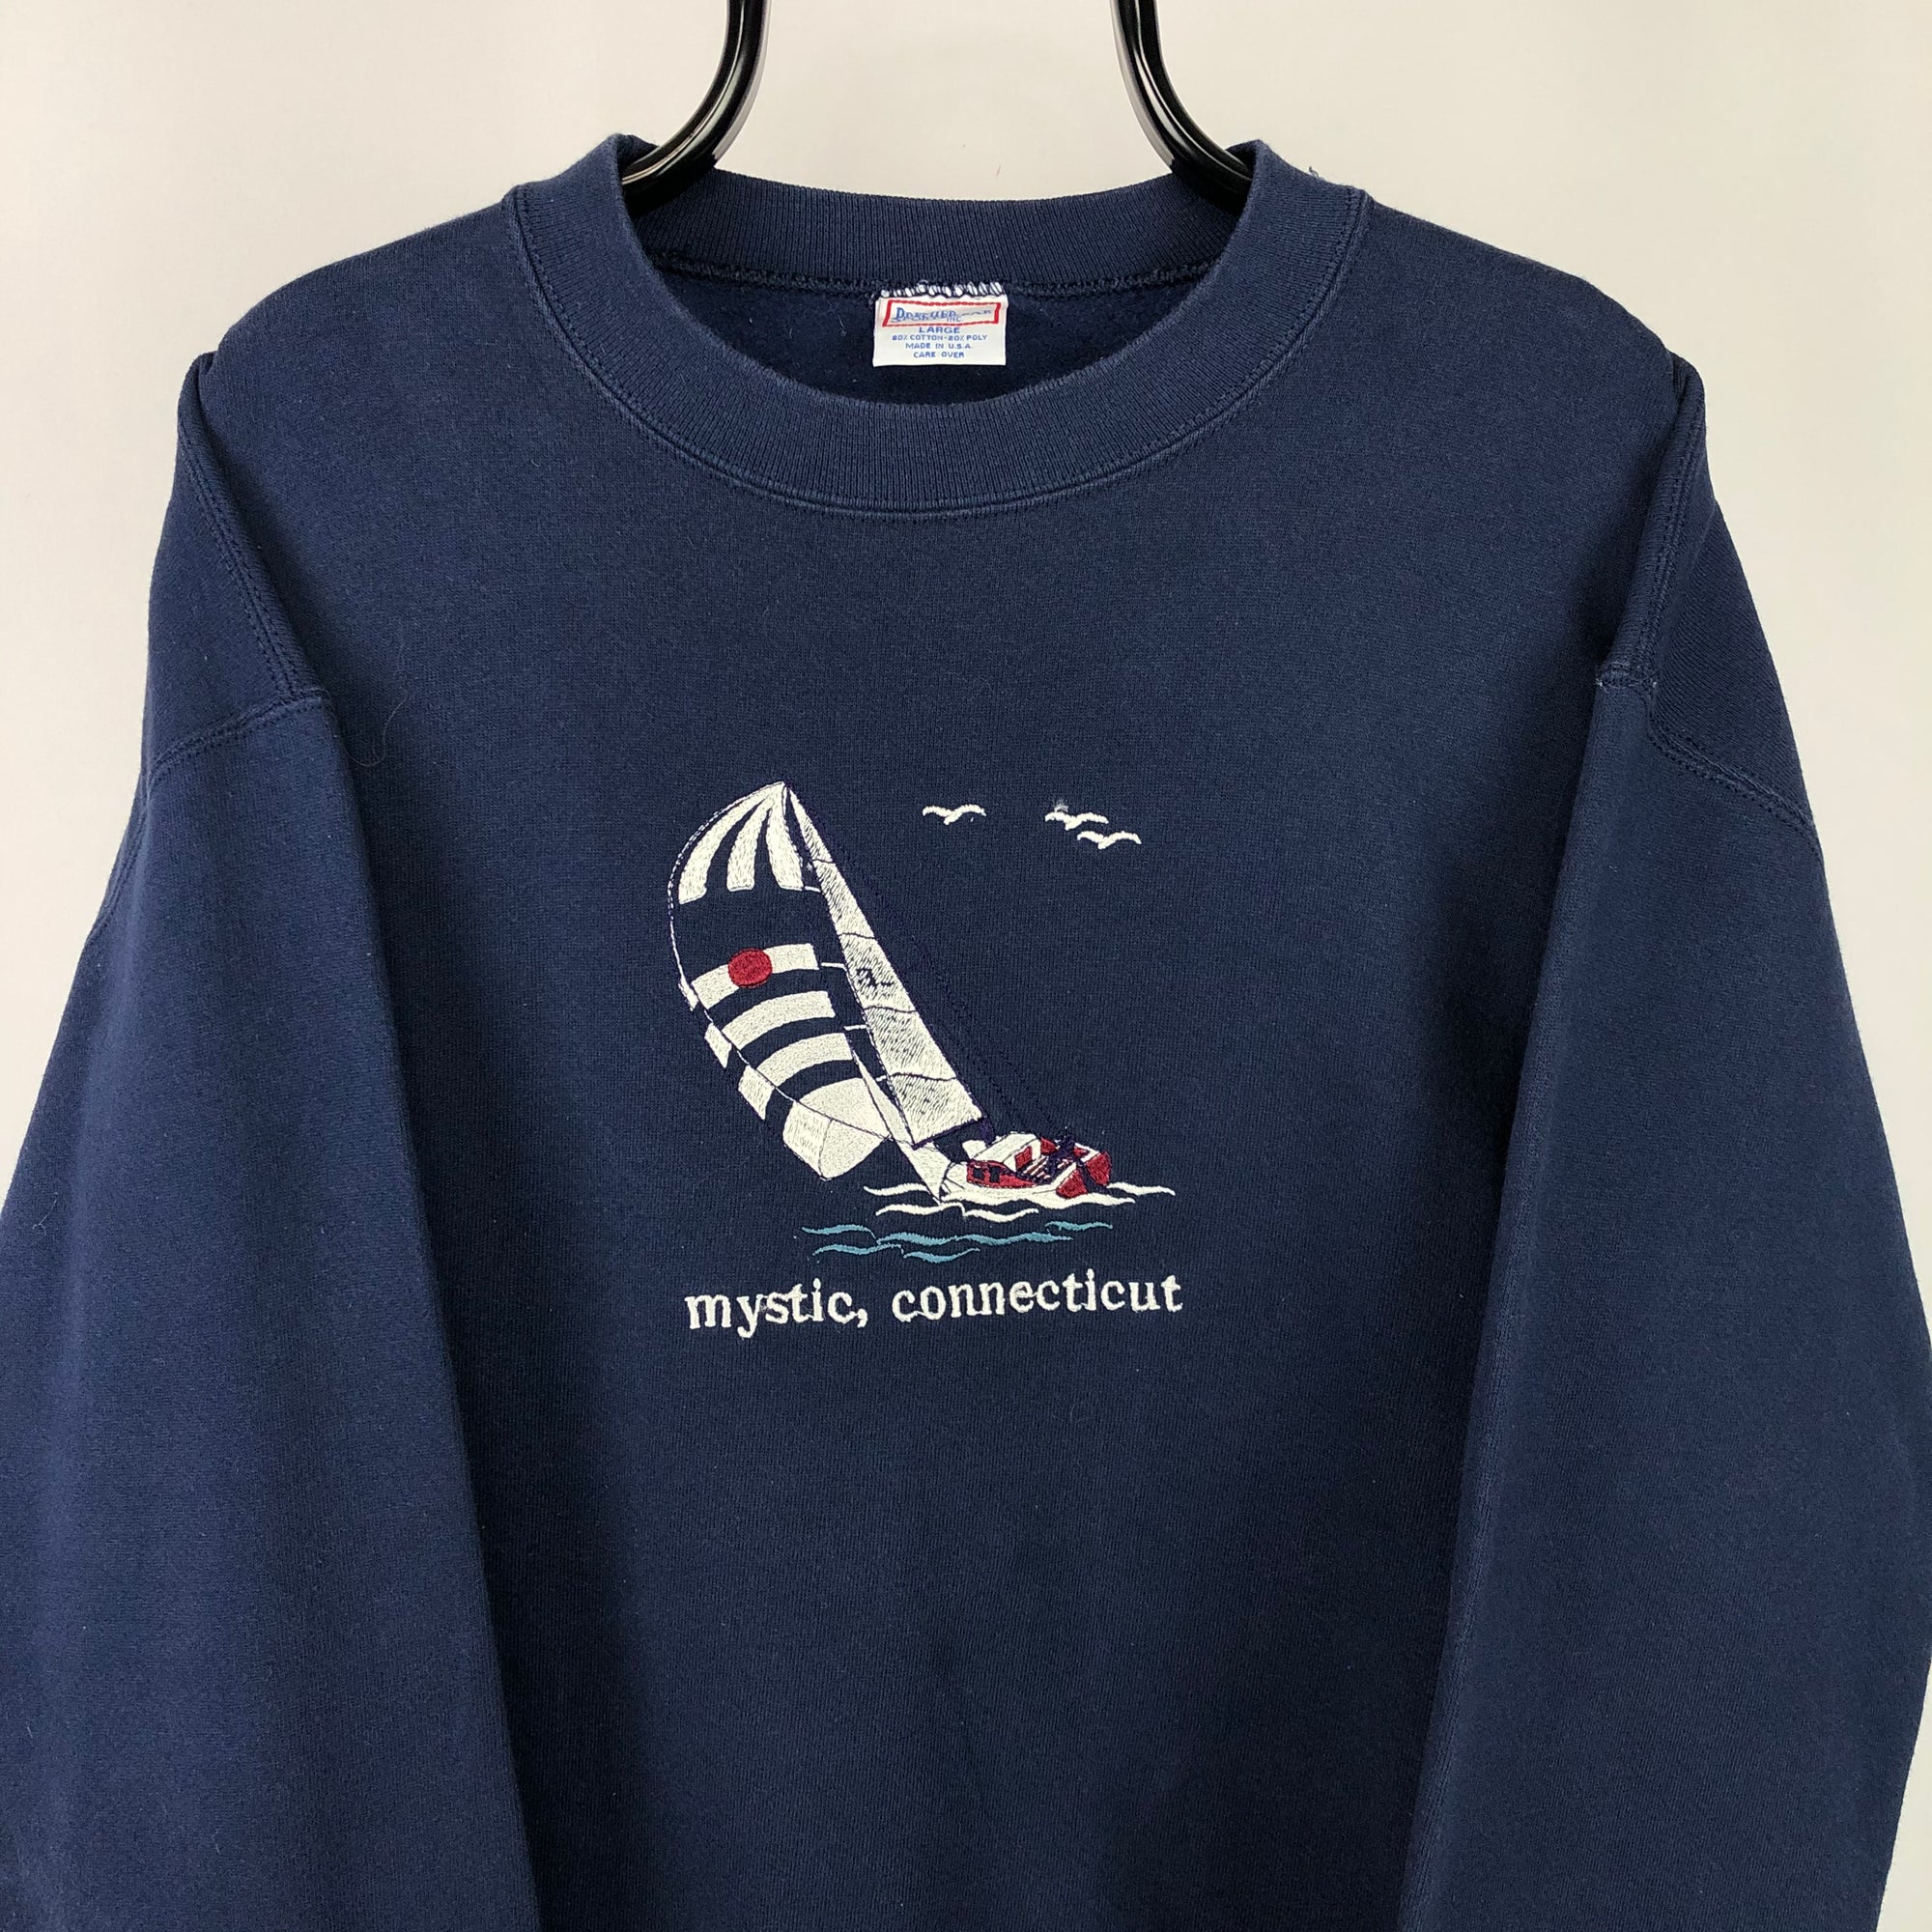 Vintage 90s Connecticut Embroidery Sweatshirt in Navy - Men's Large/Women's XL